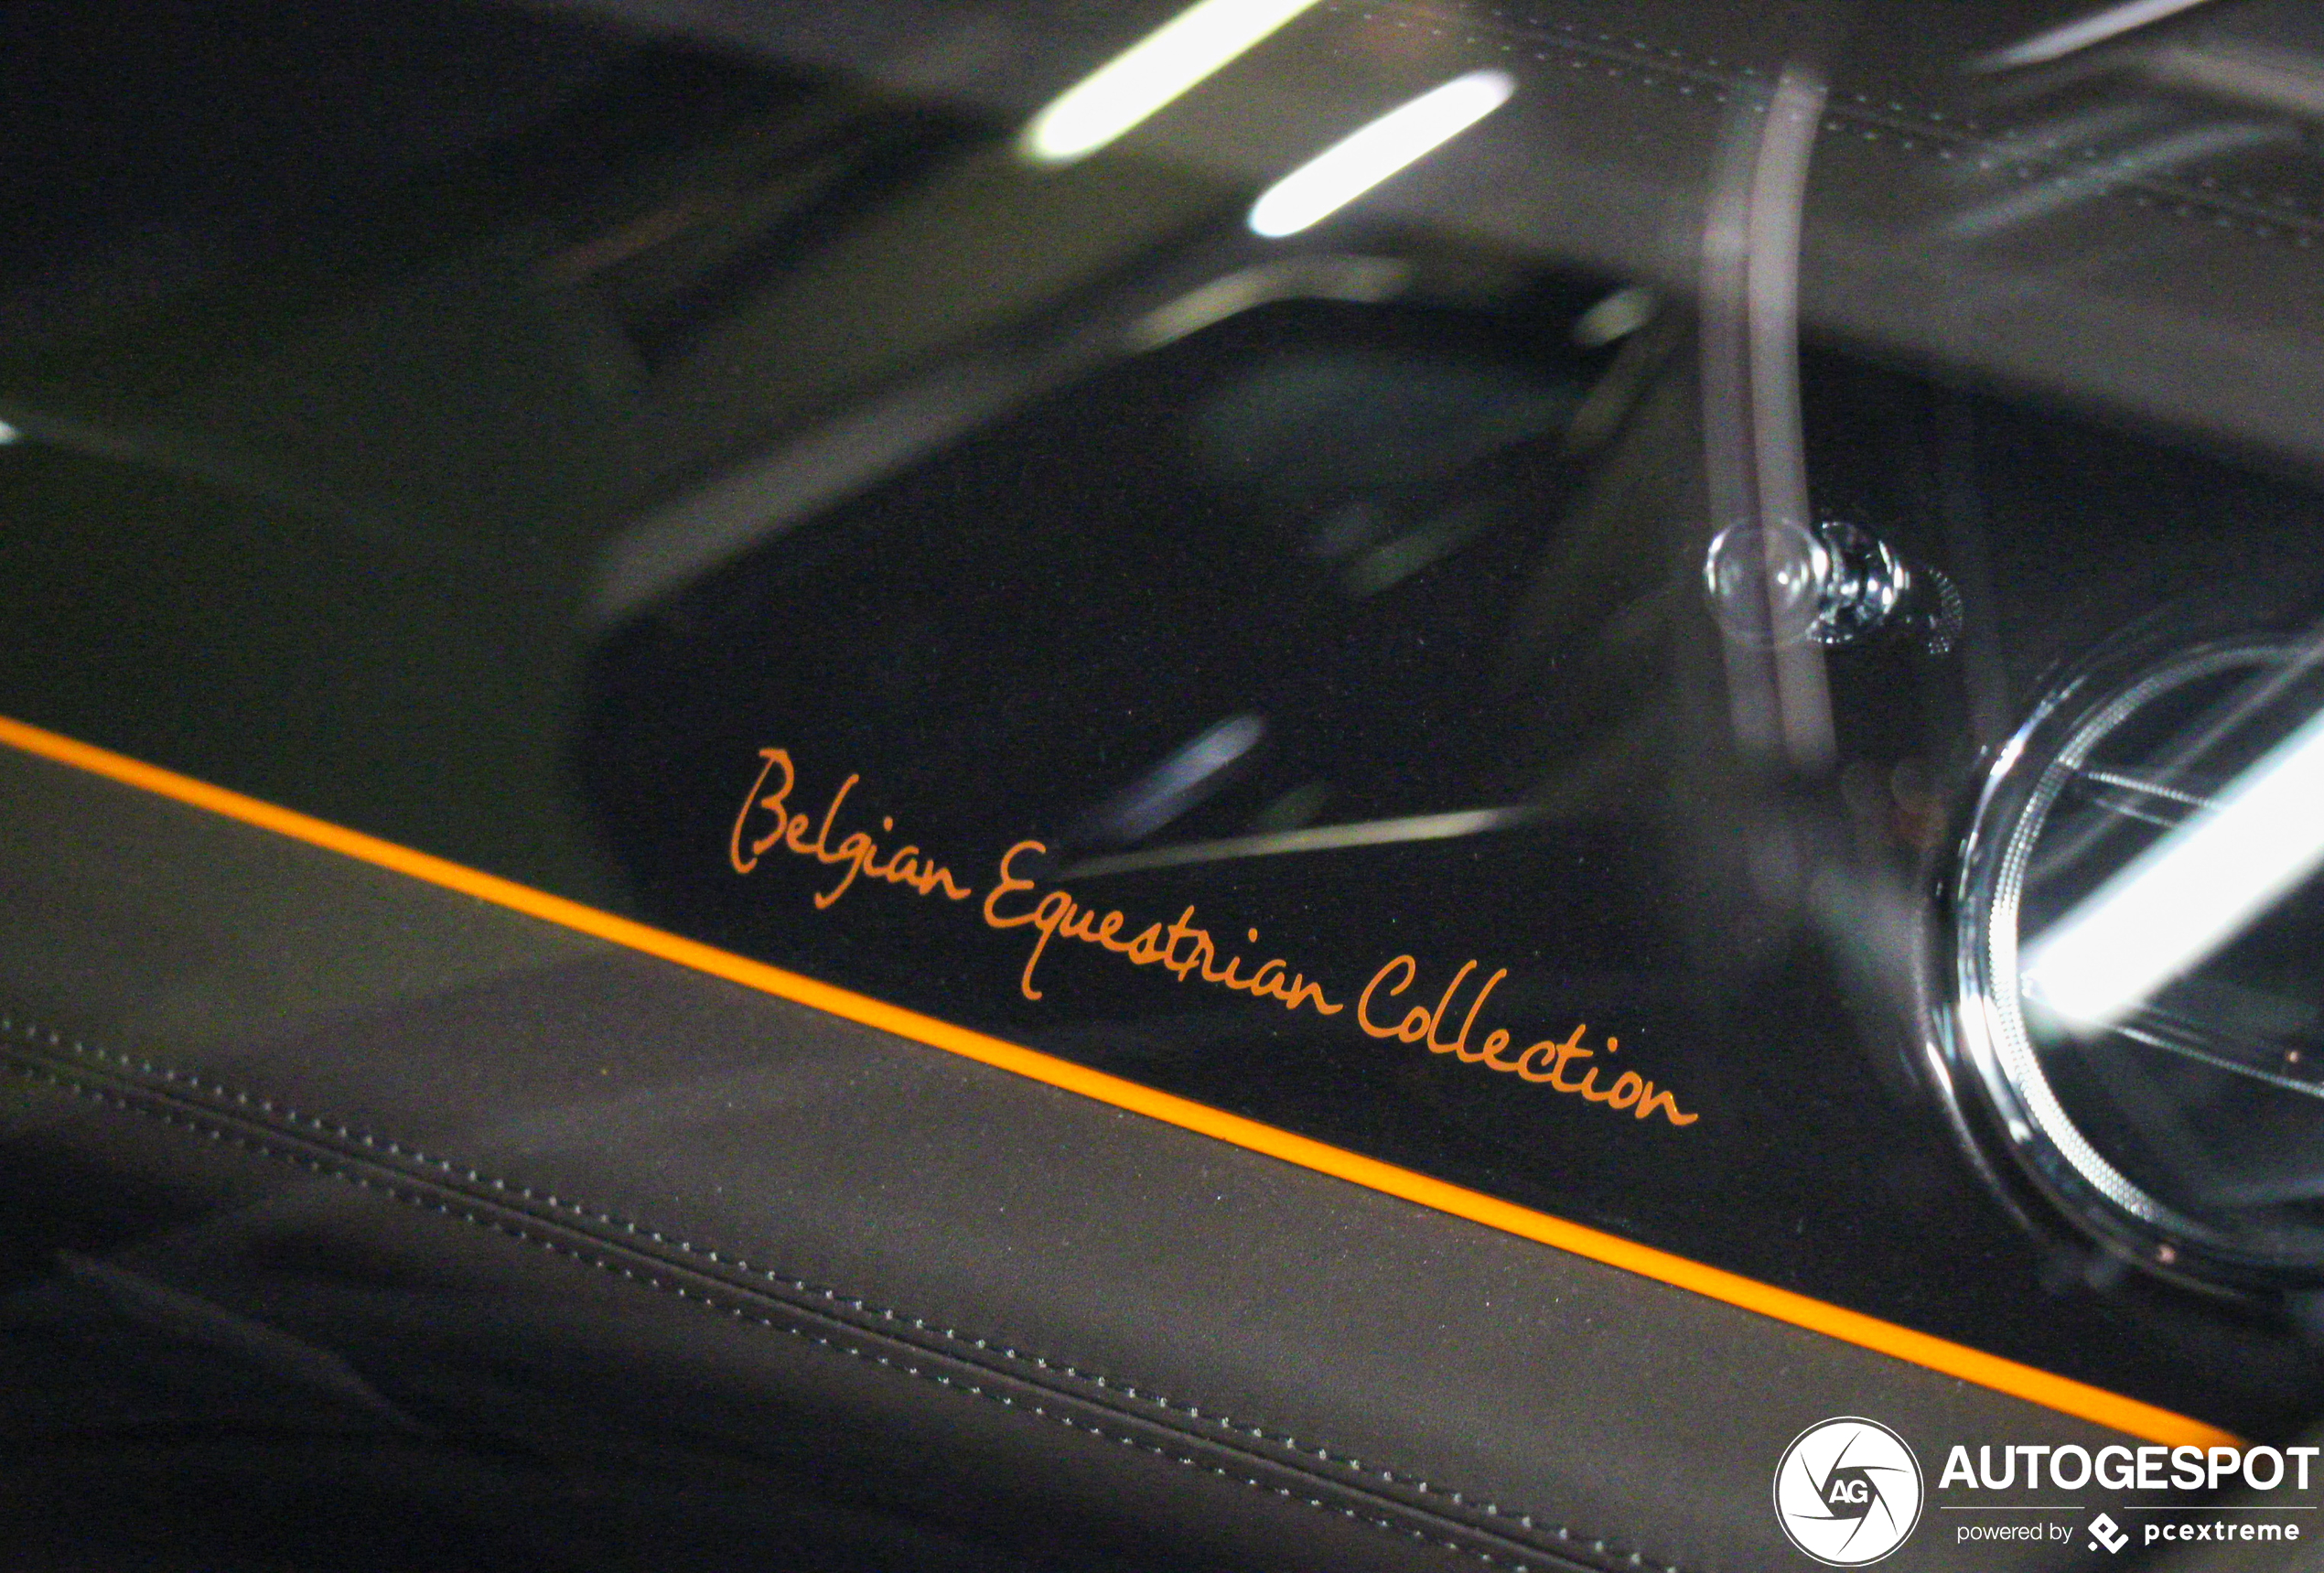 Bentley Bentayga V8 2021 Belgian Equestrian Collection